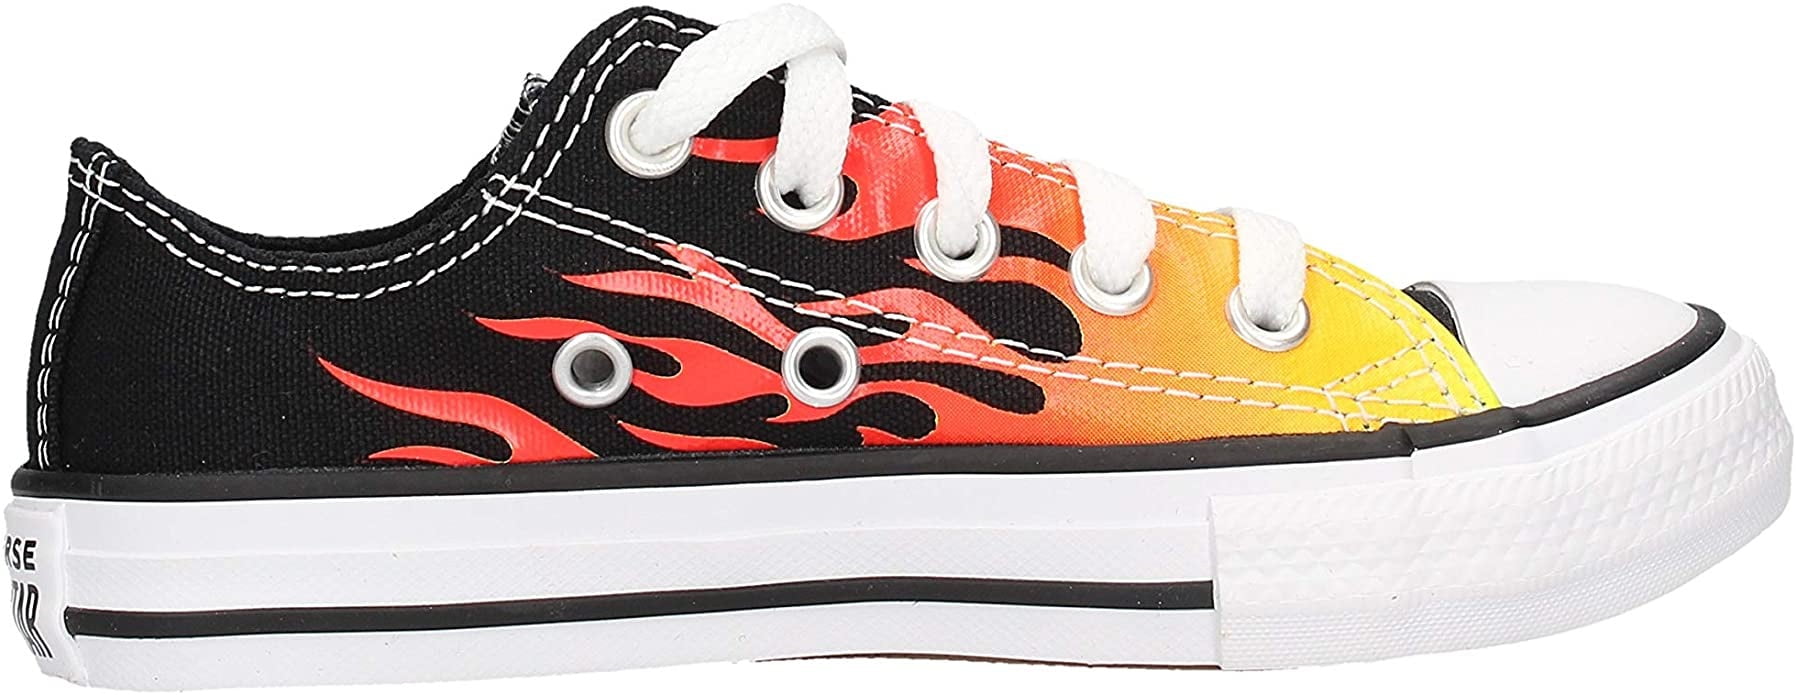 Converse Chuck Taylor Star Kids' Black Textile Low Sneakers -